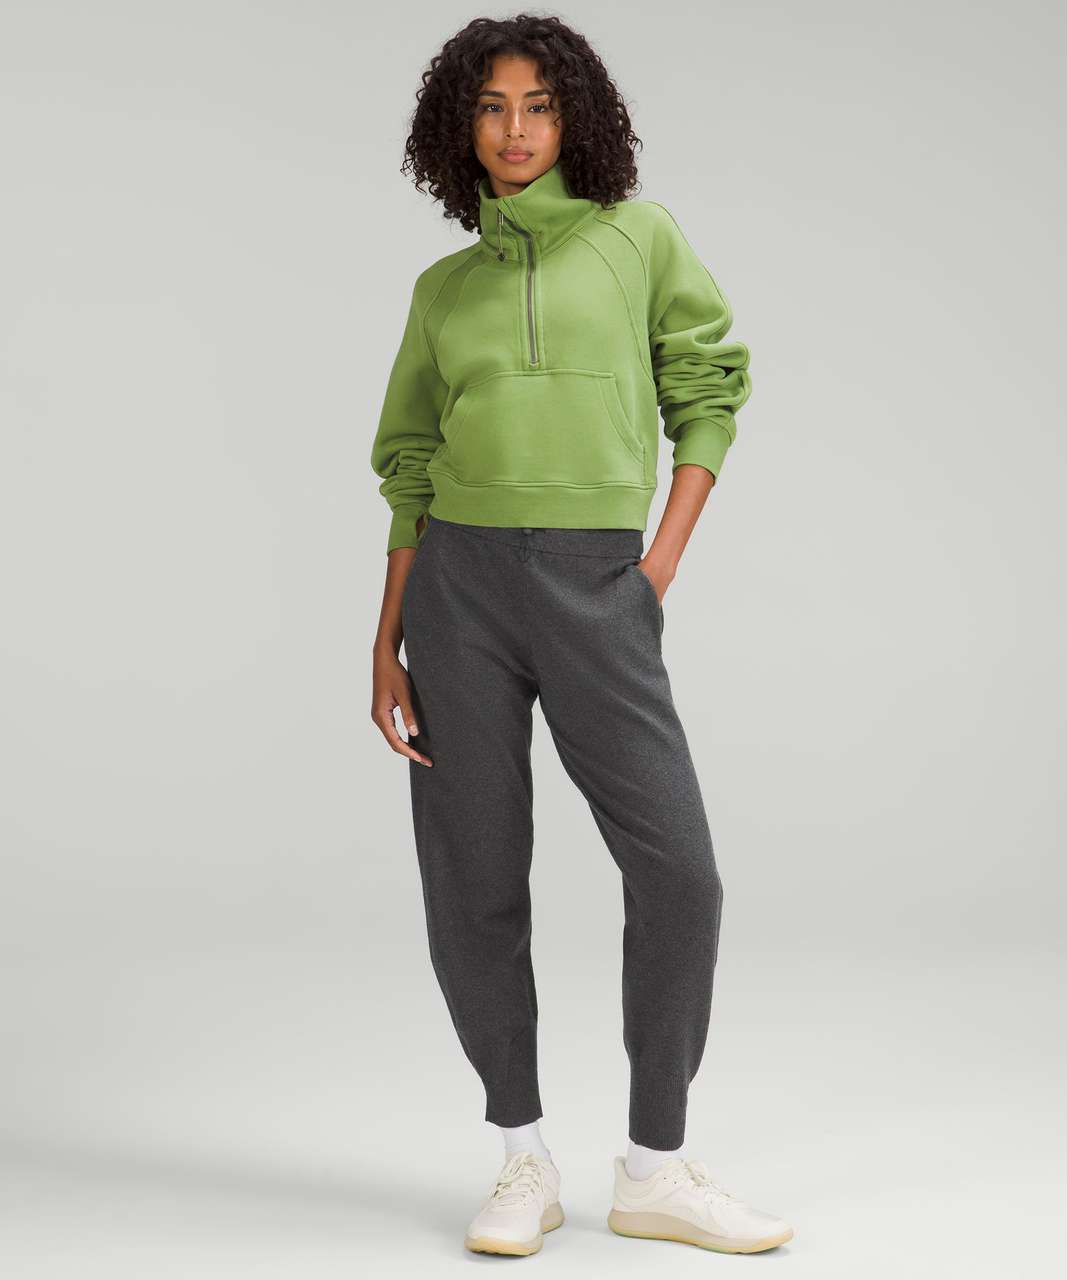 The lulu cotton cashmere sweater and jogger set is a joke…… immediate  return 🙅🏼‍♀️ : r/lululemon